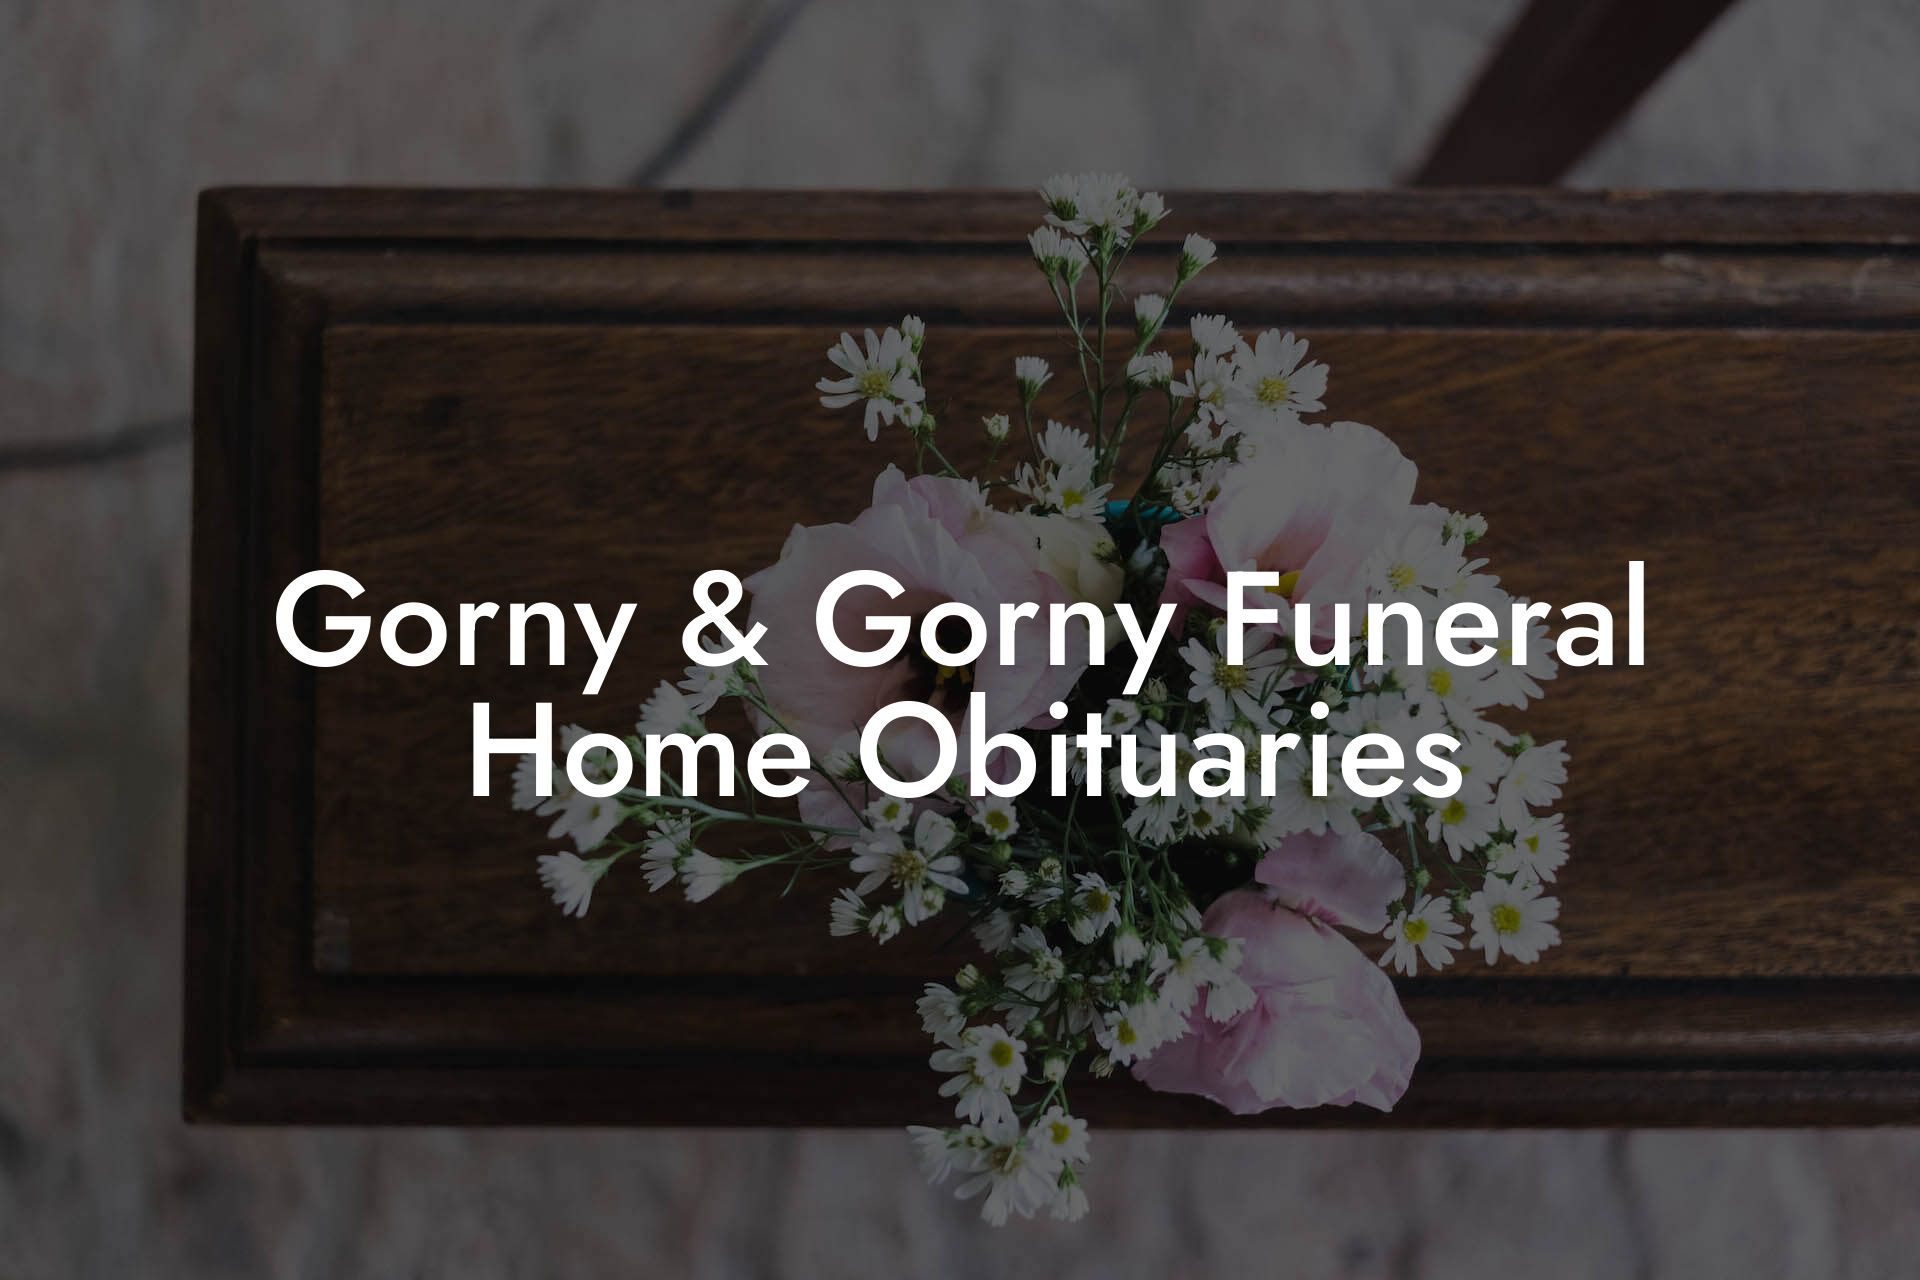 Gorny & Gorny Funeral Home Obituaries